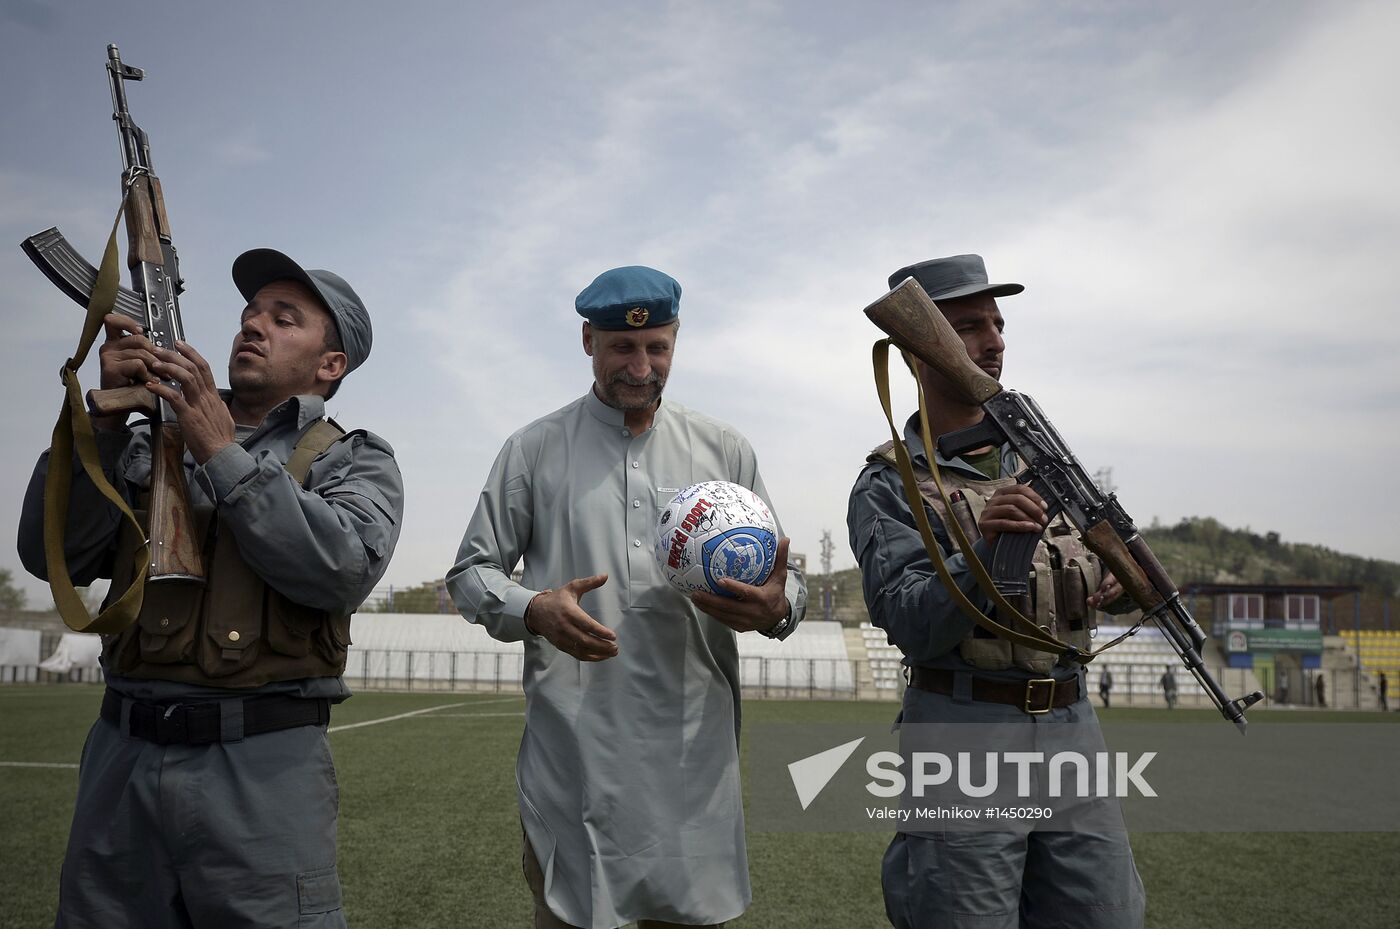 Football match of "Shuravi against Mujahideen" series in Kabul